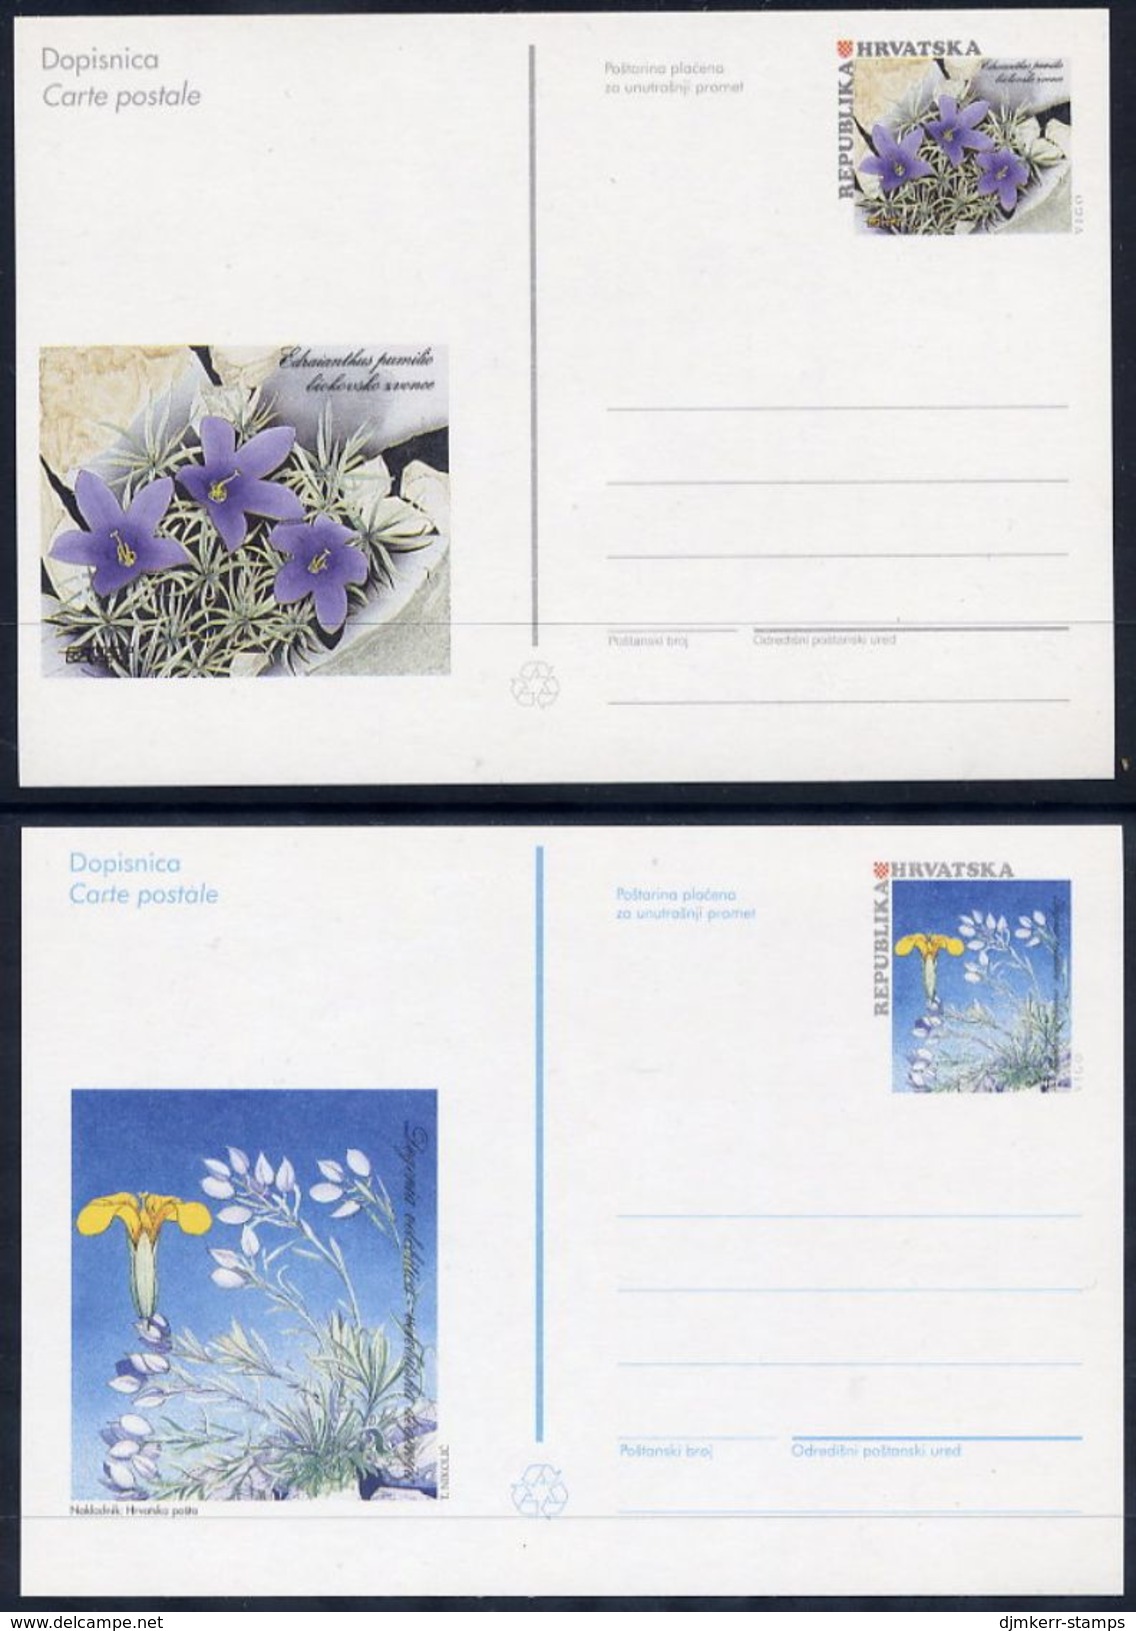 CROATIA  1998-99  Postal Stationery Cards 1.40k, 1.45 K. Plants Unused.  Michel P10-11 - Croatia